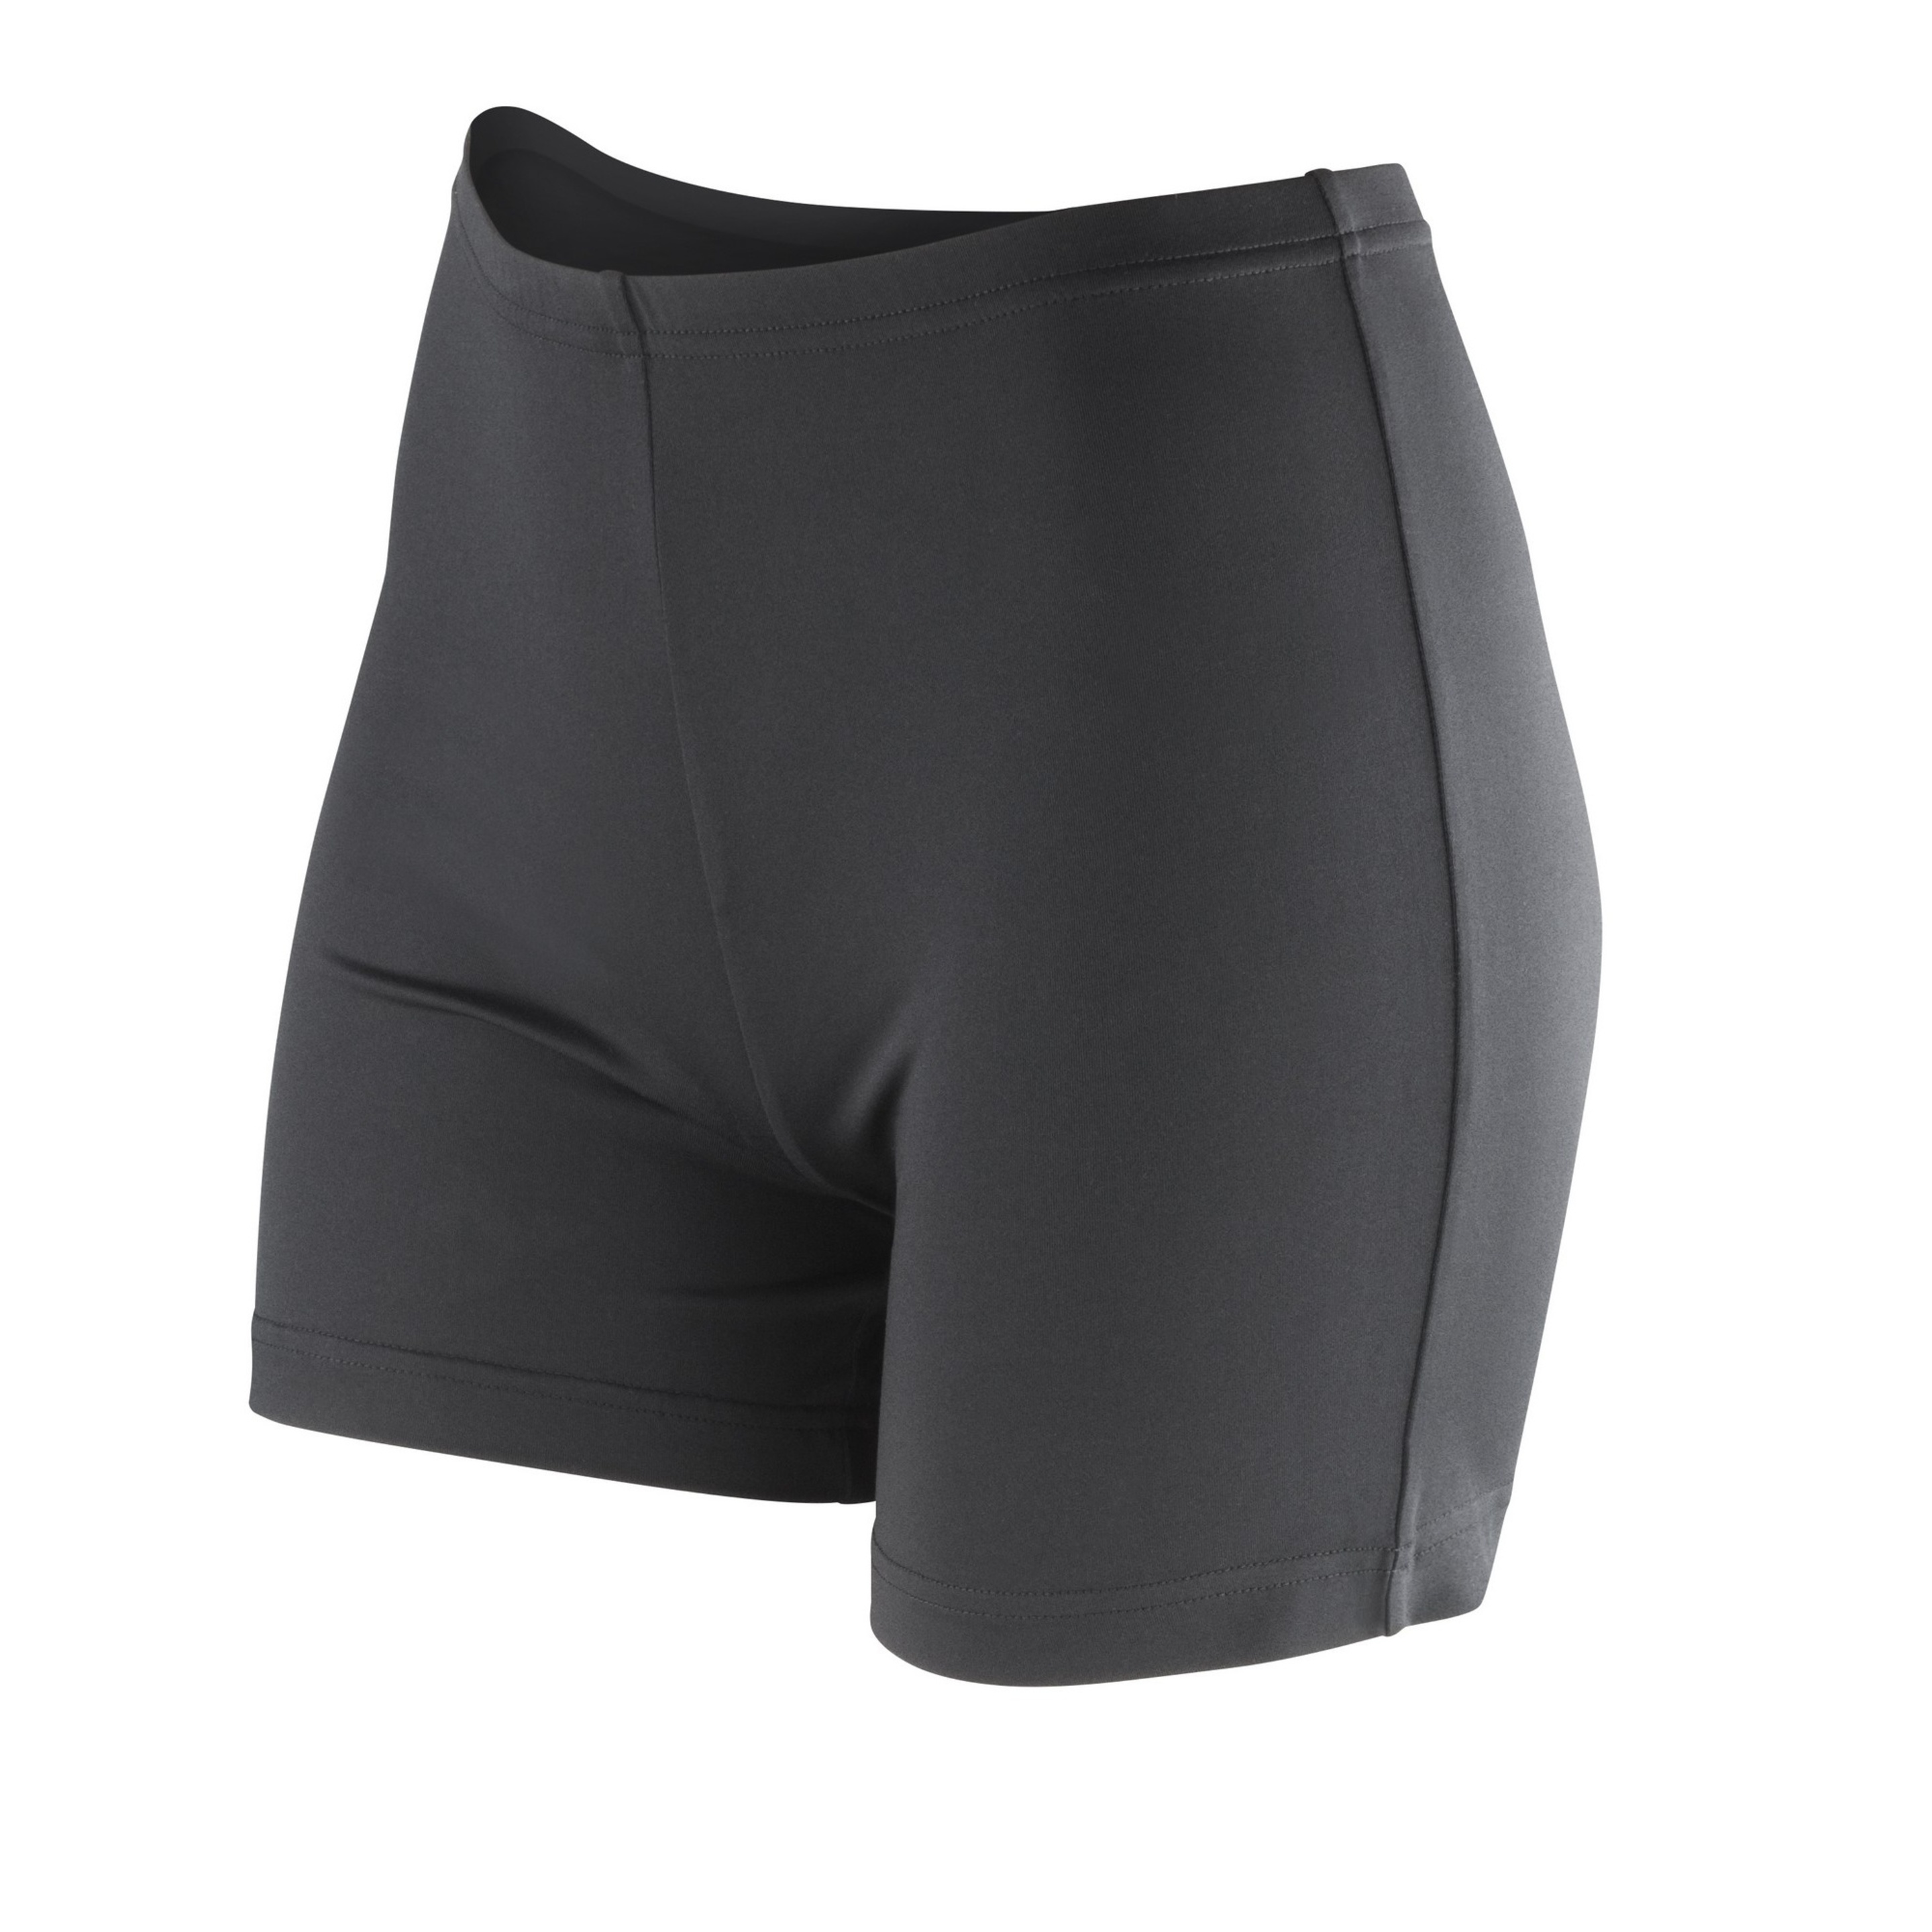 Pantalones Cortos Elásticos Modelo Softex Spiro - Negro  MKP